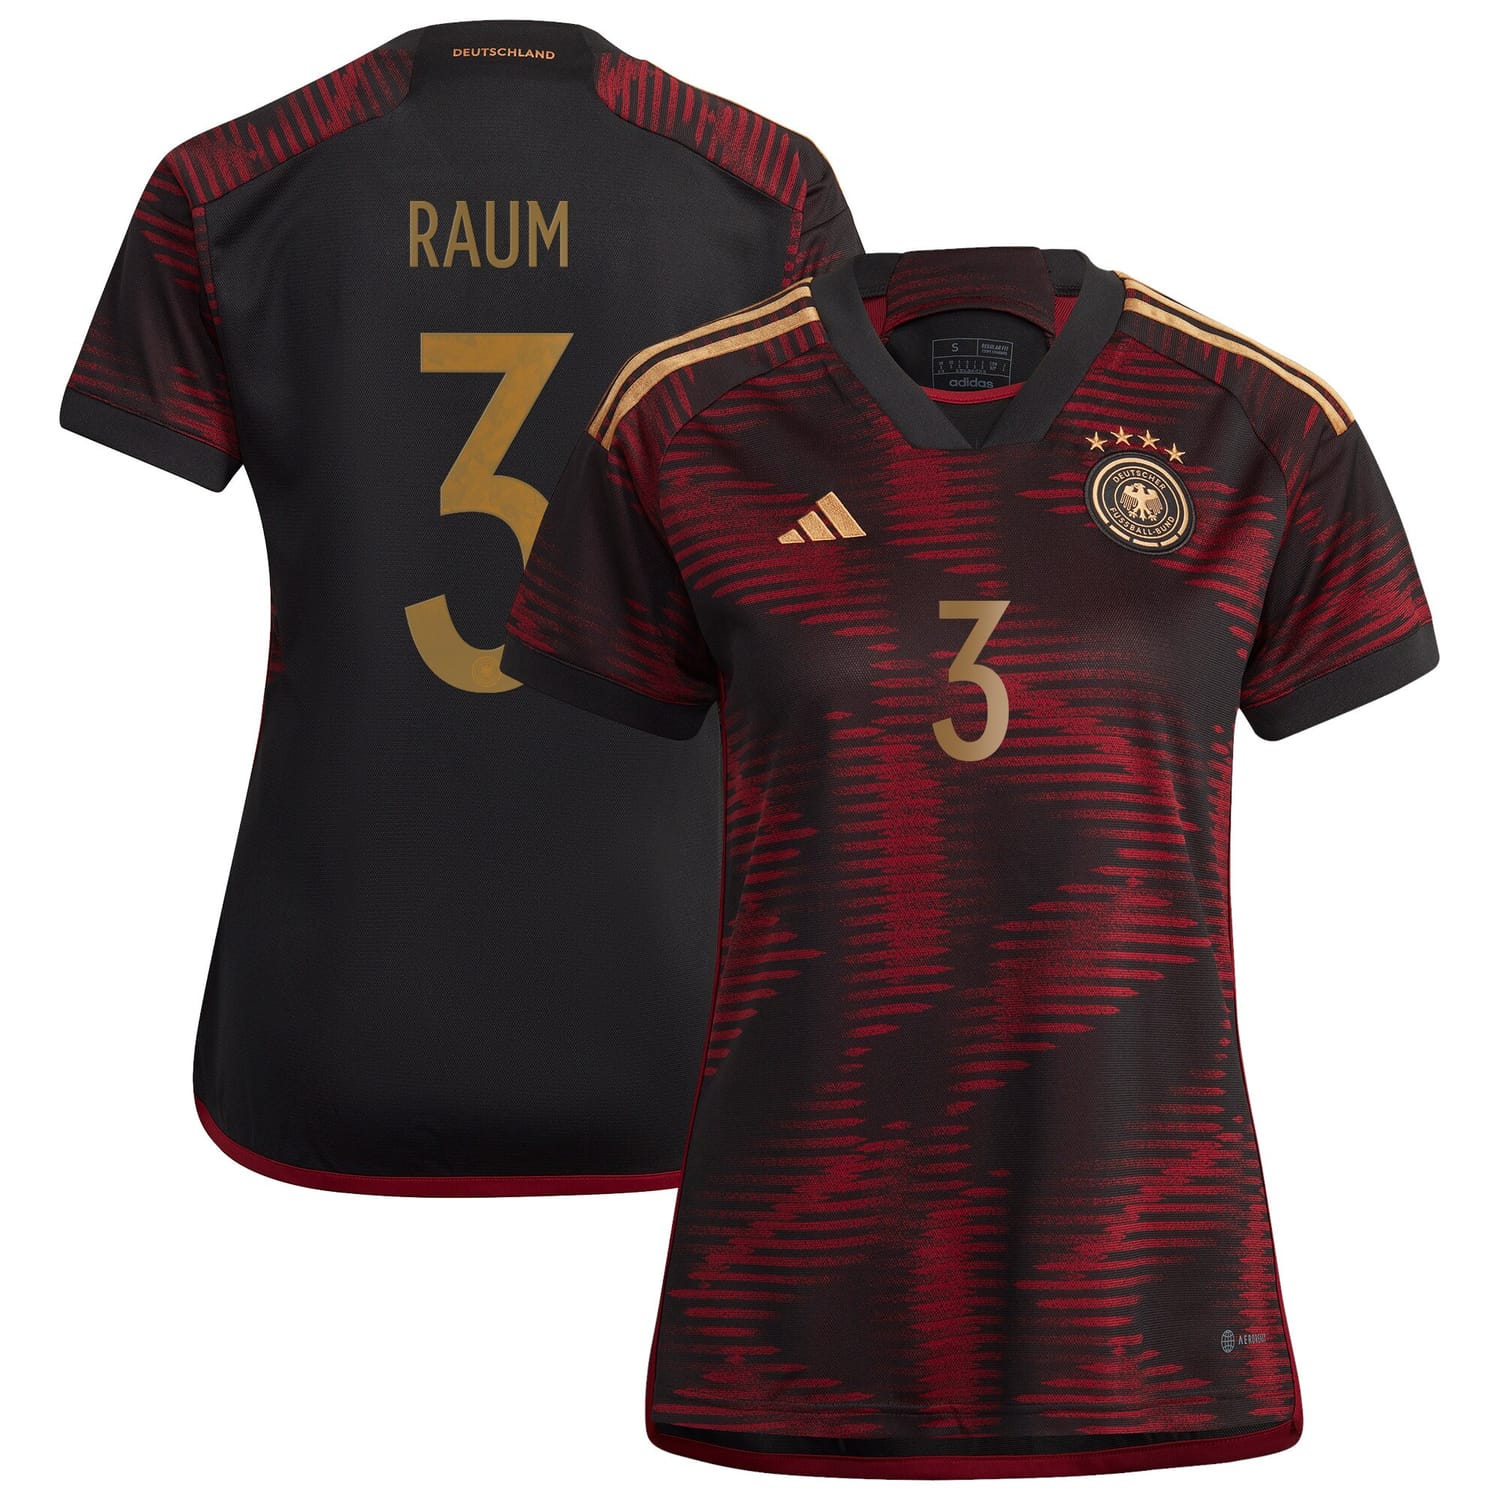 Germany National Team Away Jersey Shirt player David Raum 3 printing for Women